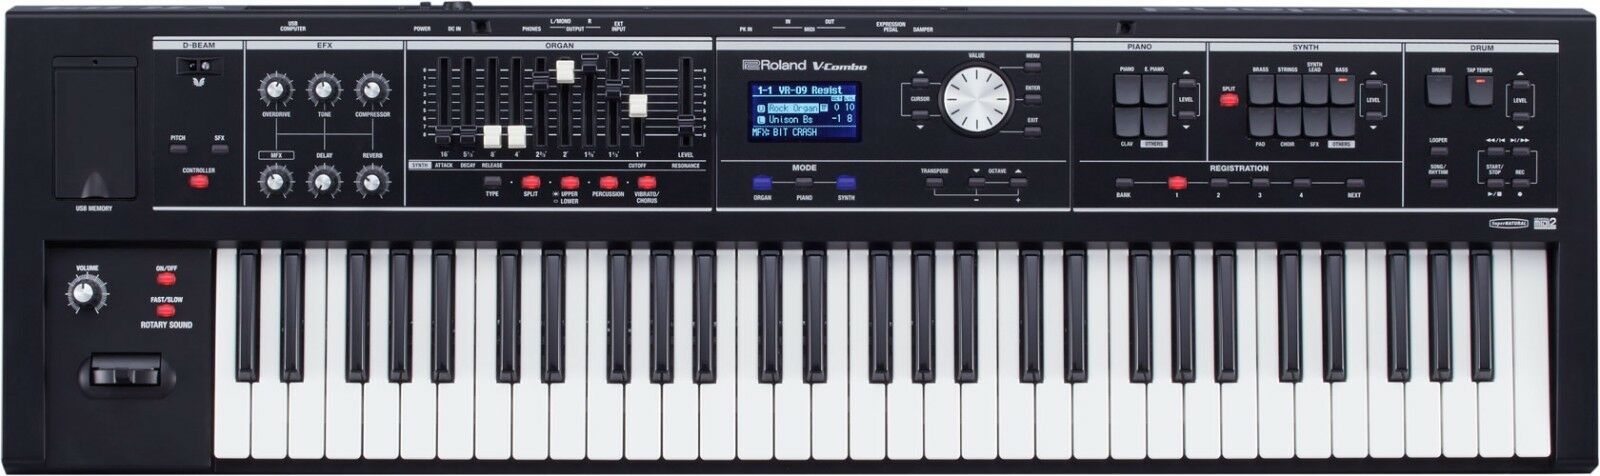 Roland V-Combo VR-09B  Performance Keyboard Organ Synth / VR 09 B  //ARMENS//